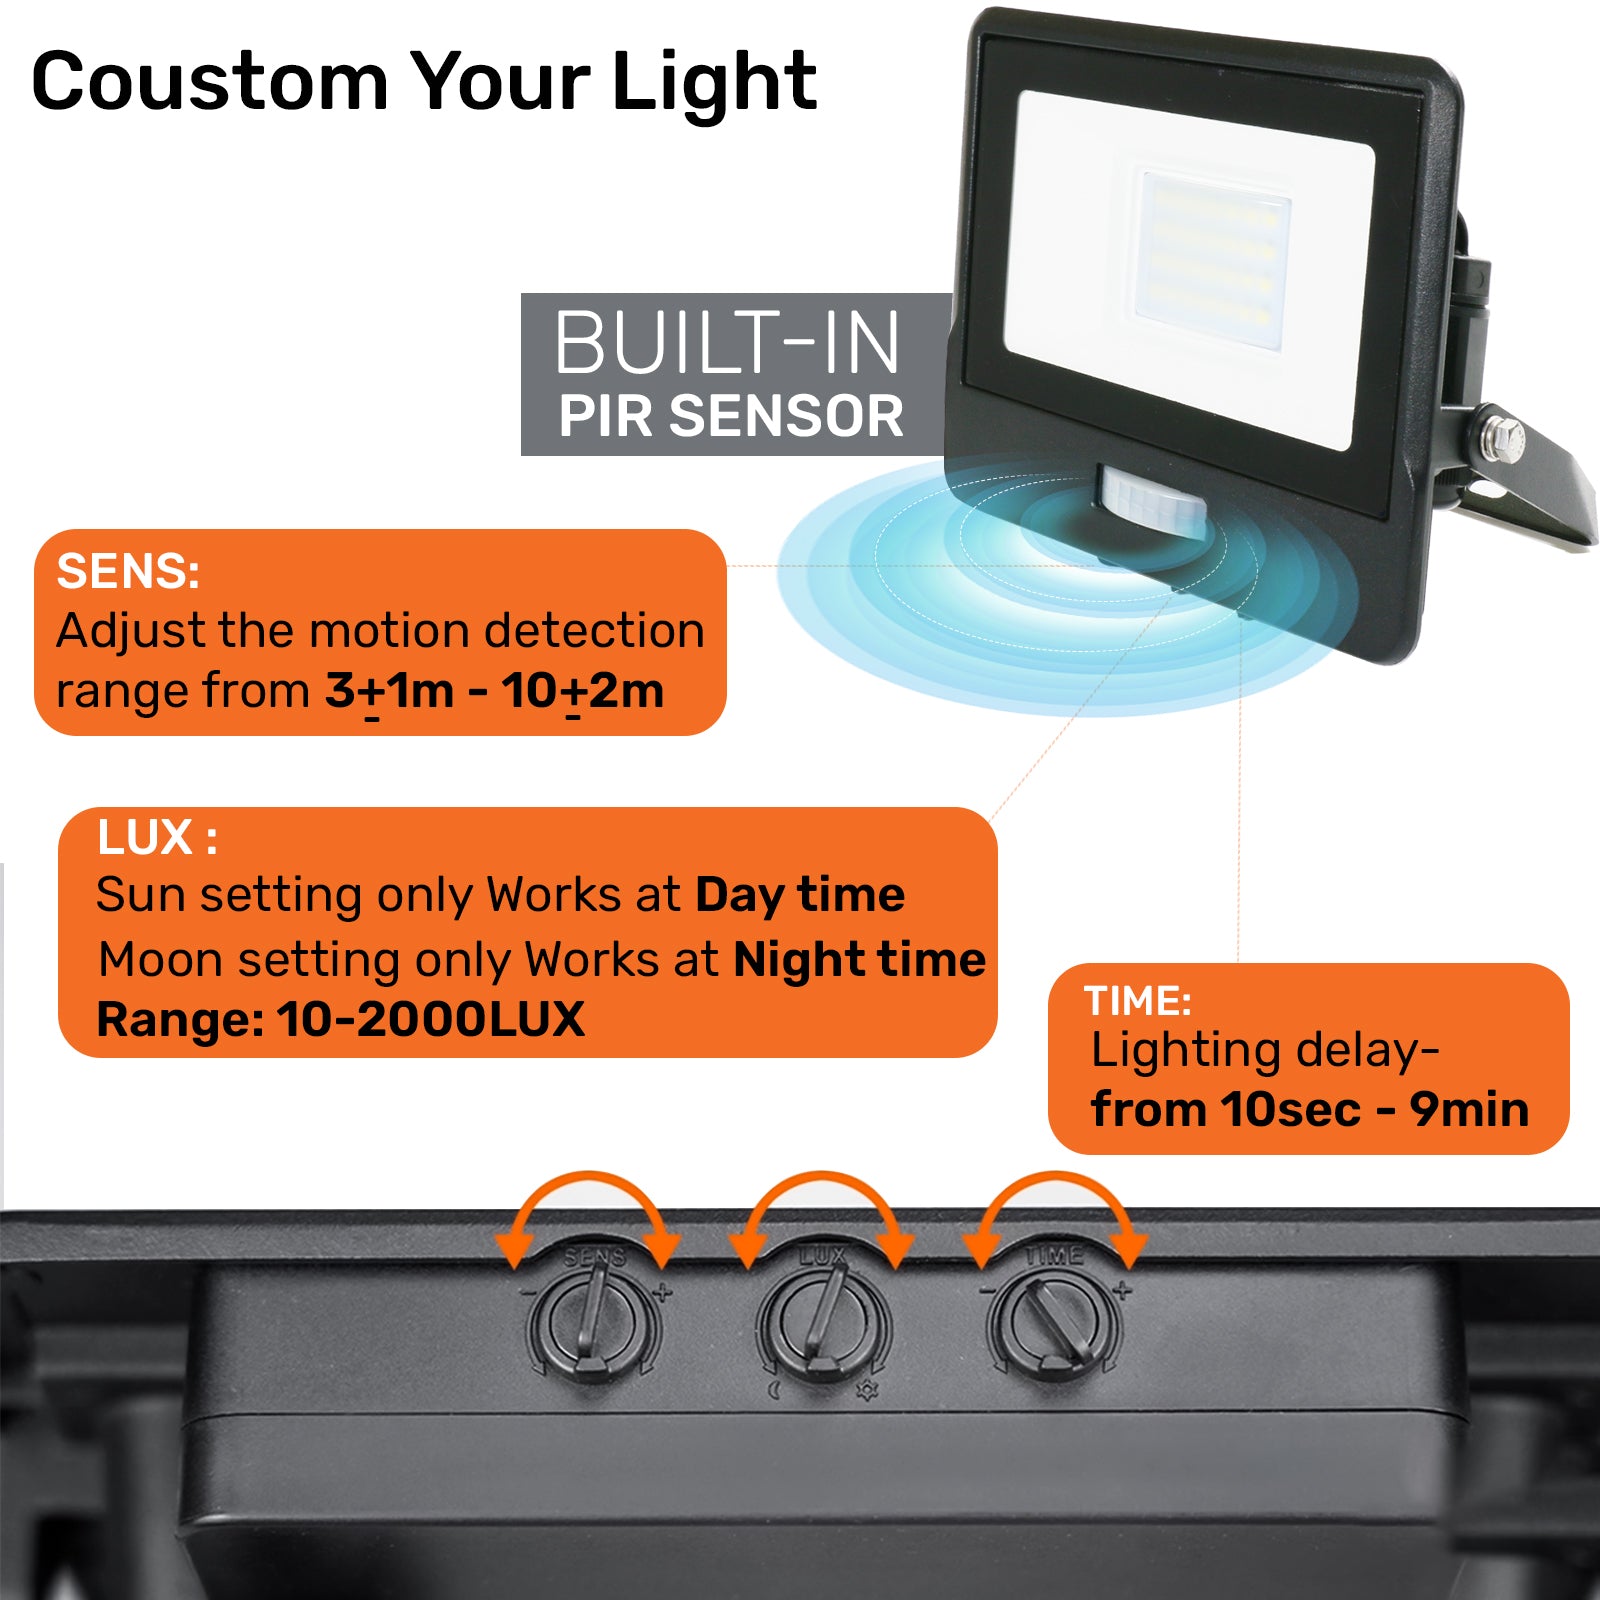 30W, LED Floodlights, 3000 Lumens, PIR Motion Sensor, 6500K Day Light, Non-Dimmable Spotlights